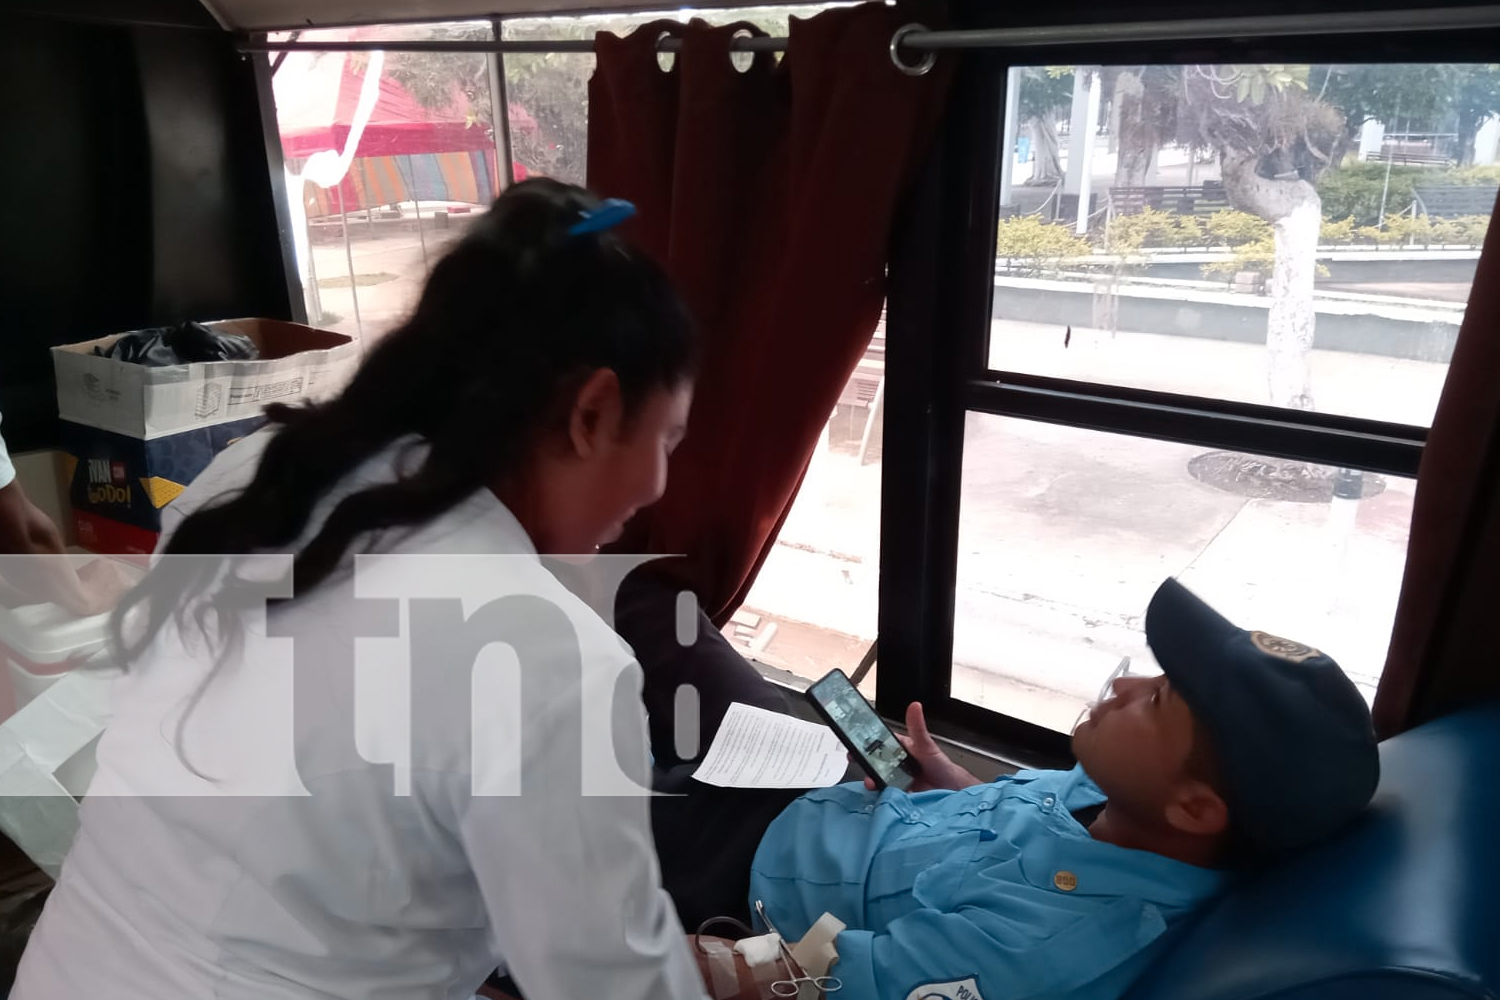 Ministerio de Salud logra recolectar sangre para 800 pacientes en Rivas